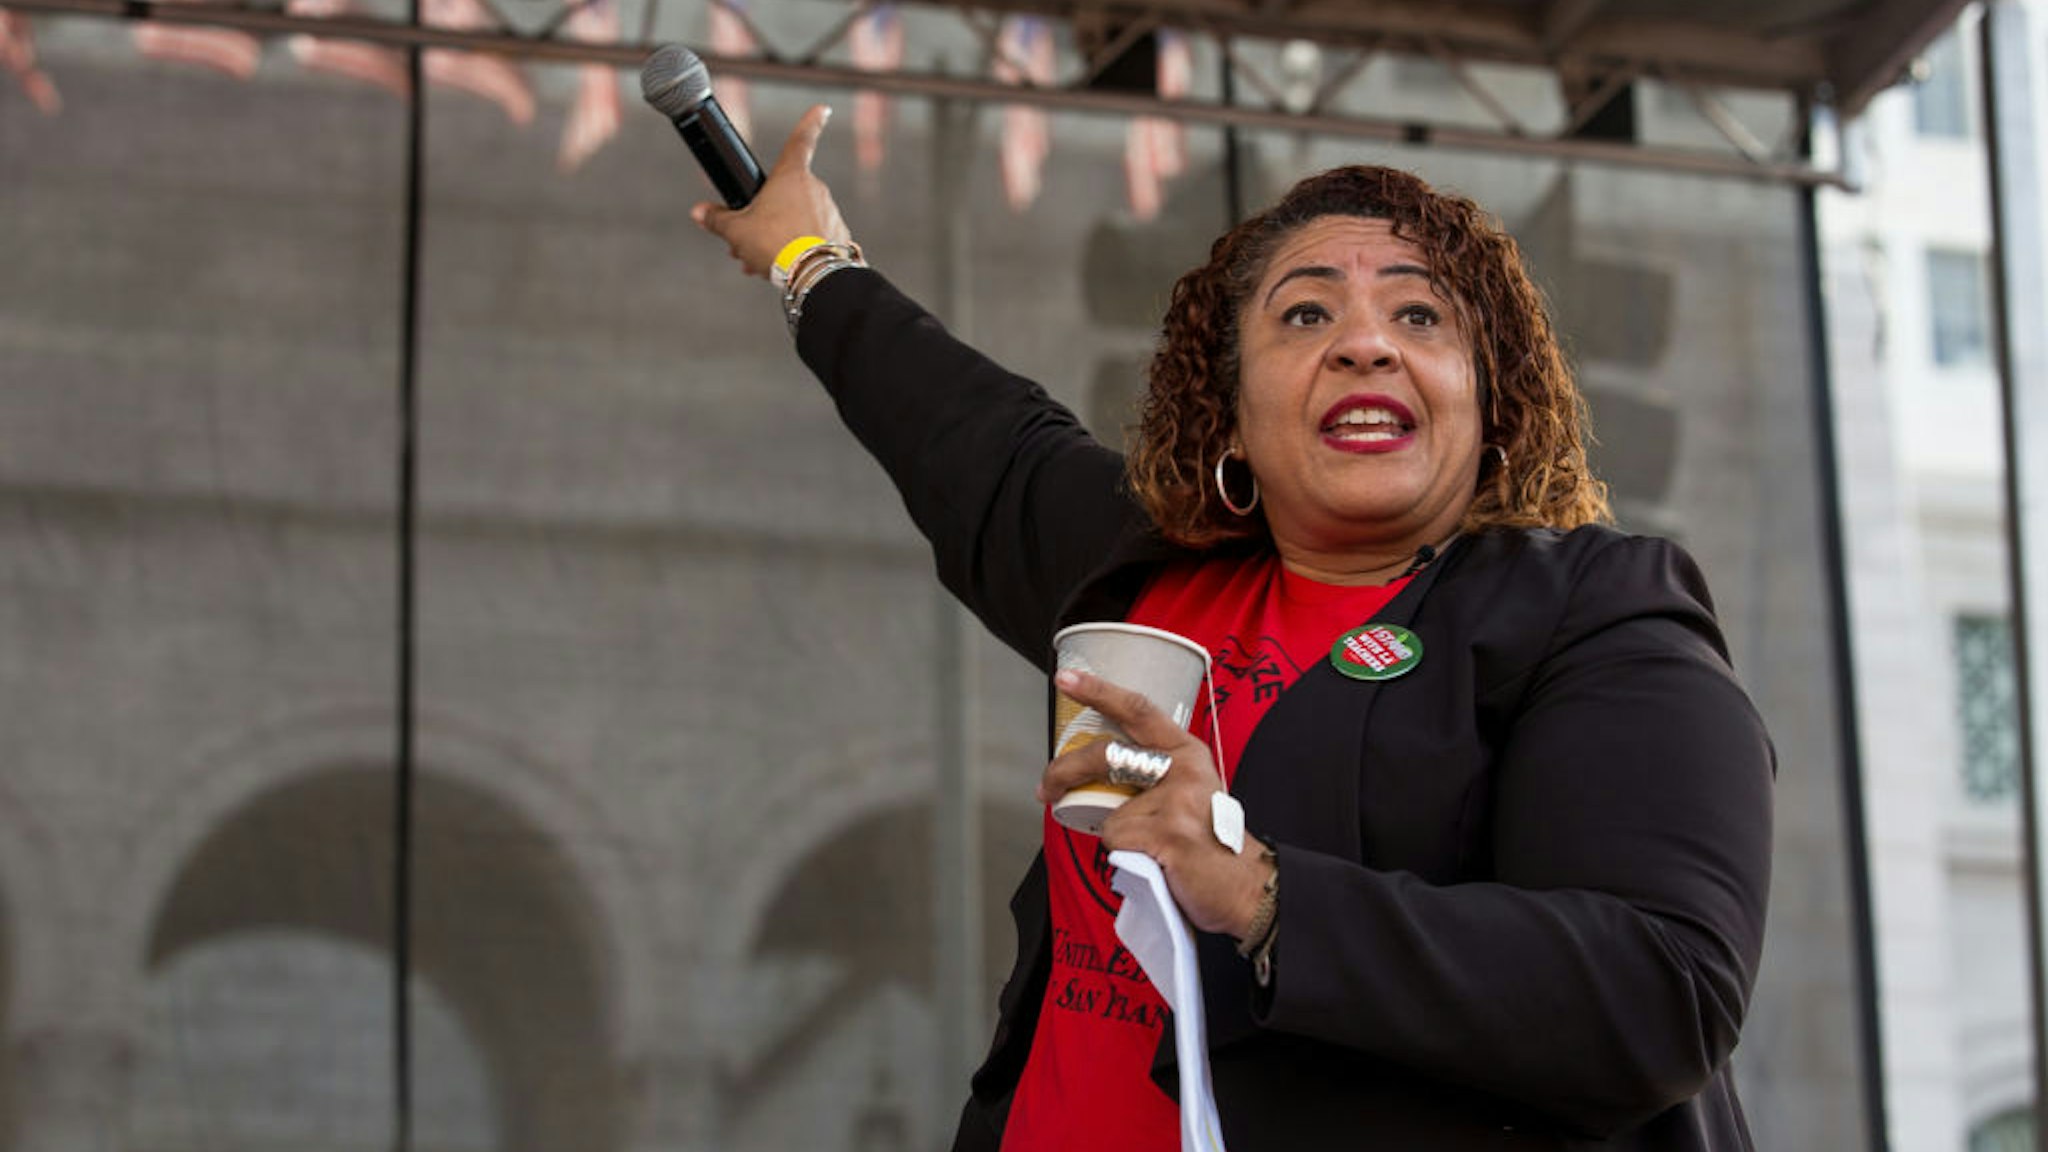 Cecily Myart-Cruz, vice president of United Teachers Los Angeles (UTLA), speaks to demonstrators during a teachers strike in Los Angeles, California, U.S., on Friday, Jan. 18, 2019.